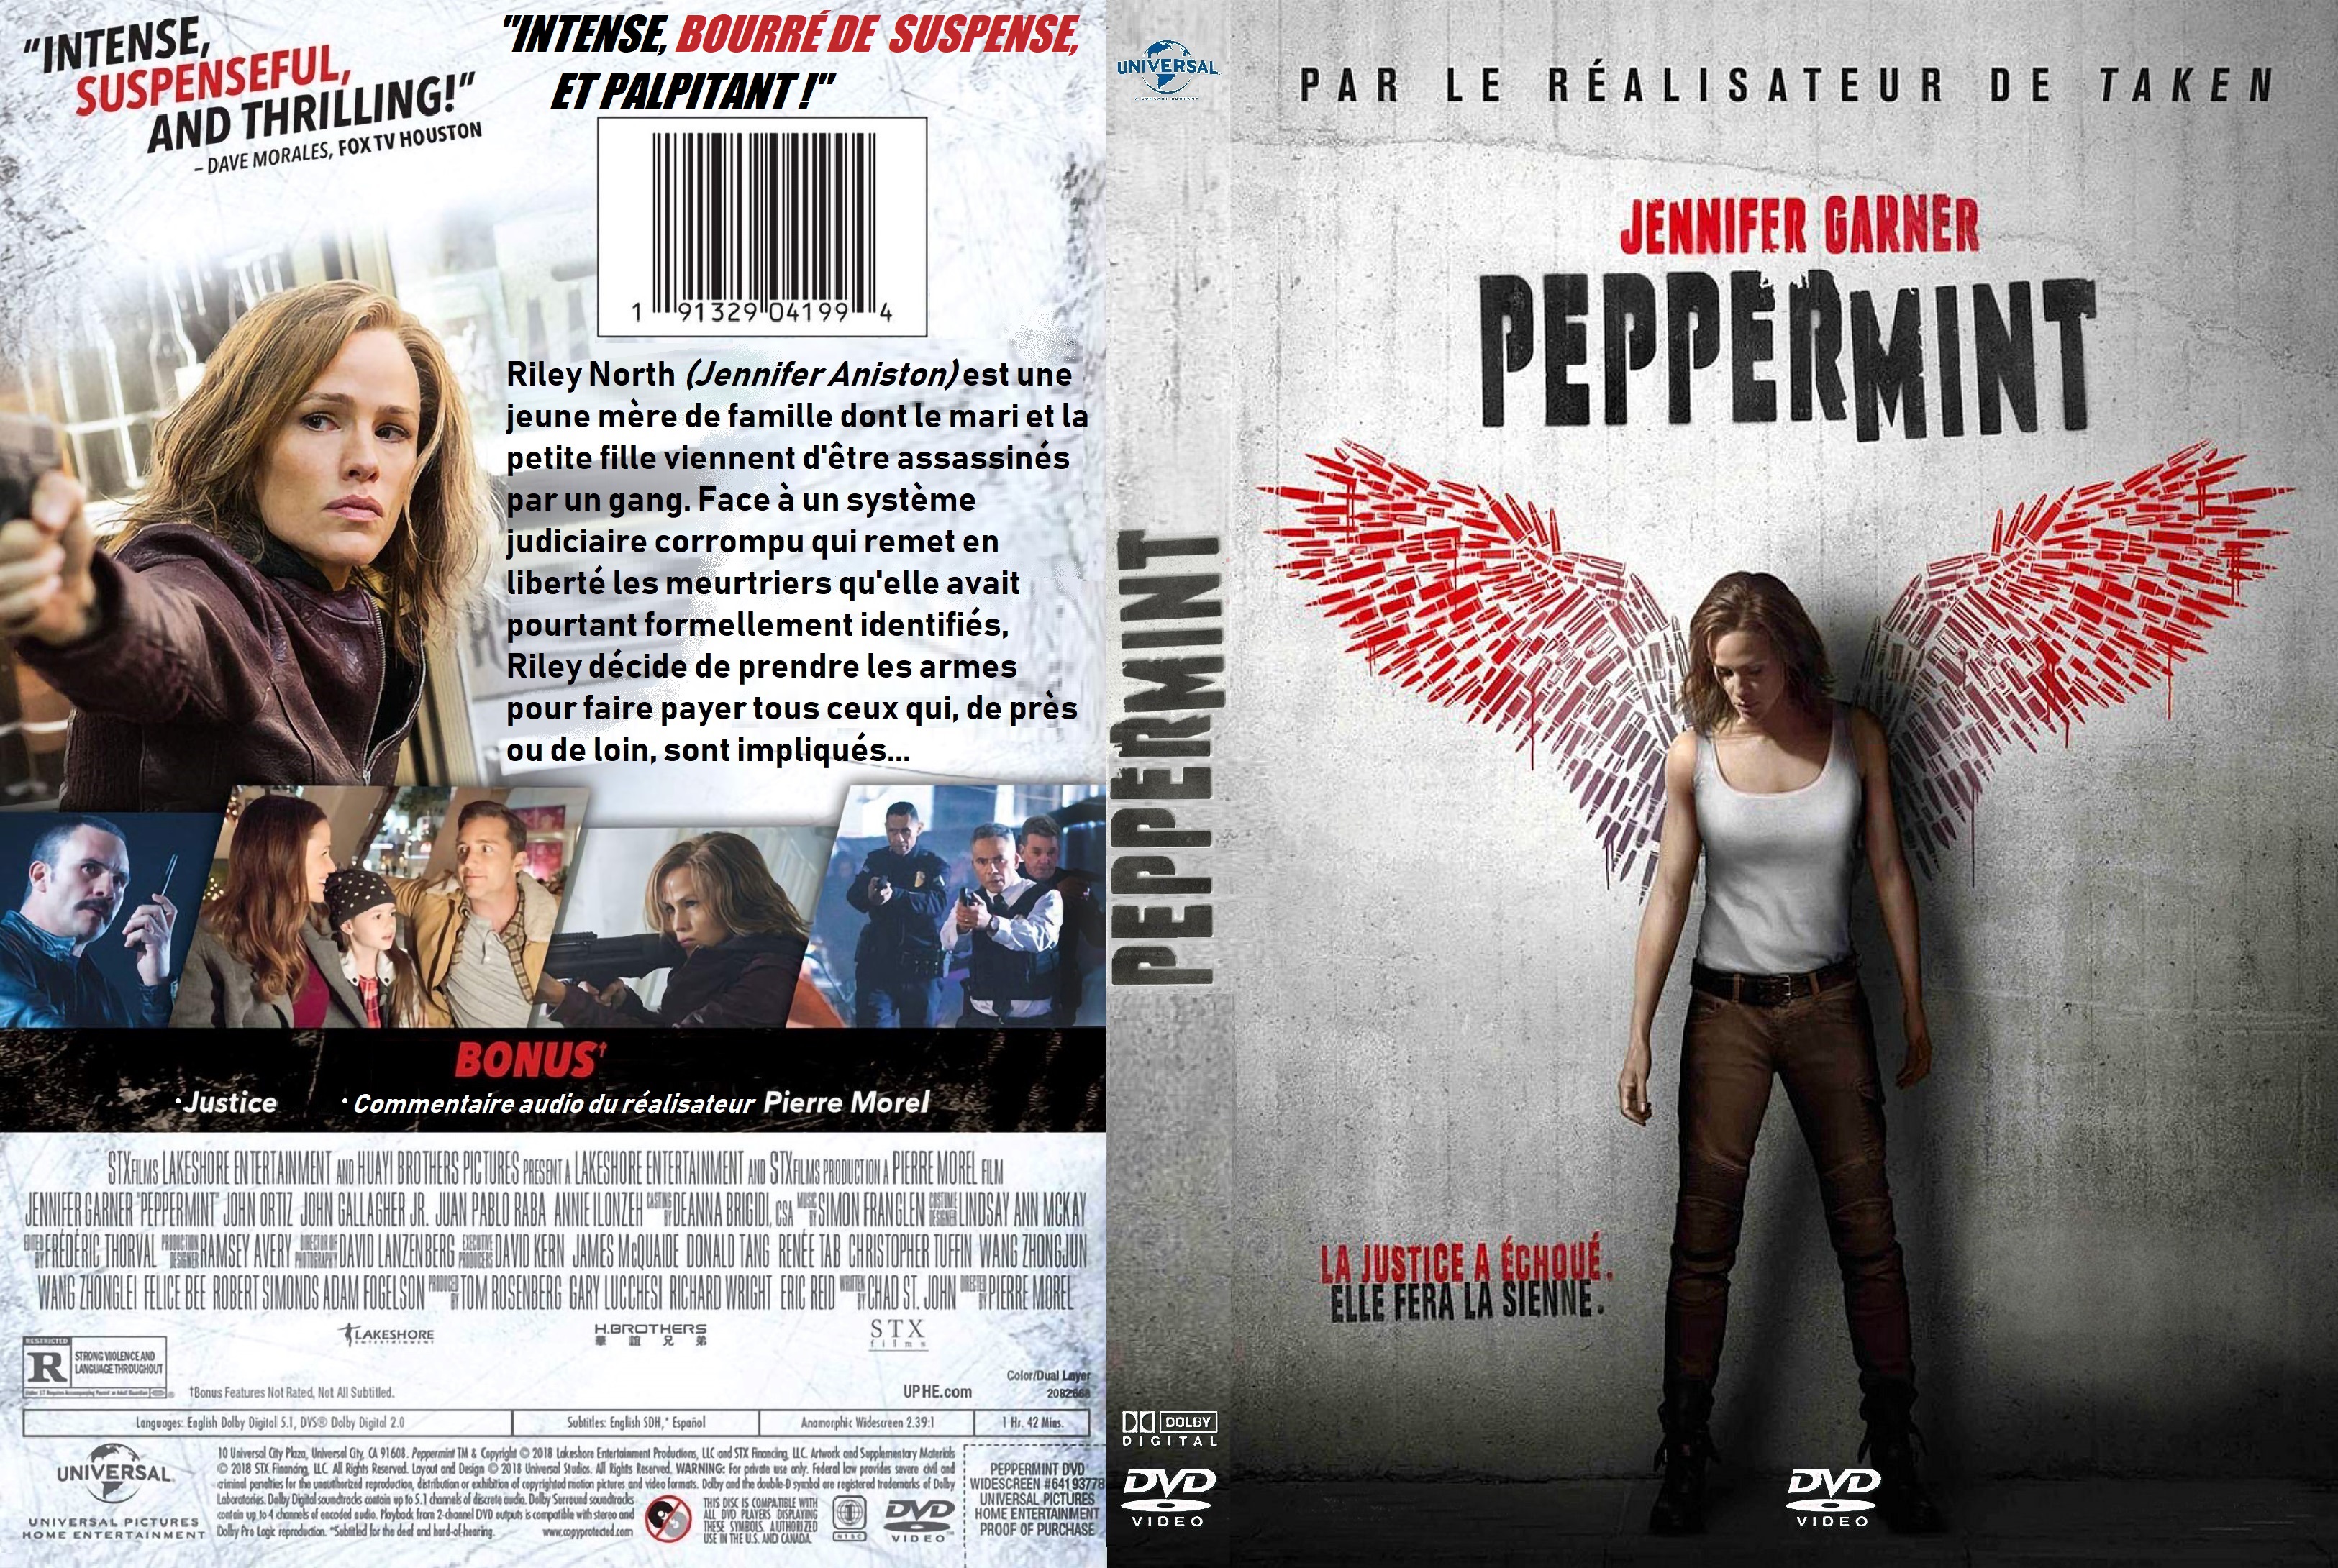 Jaquette DVD Peppermint custom